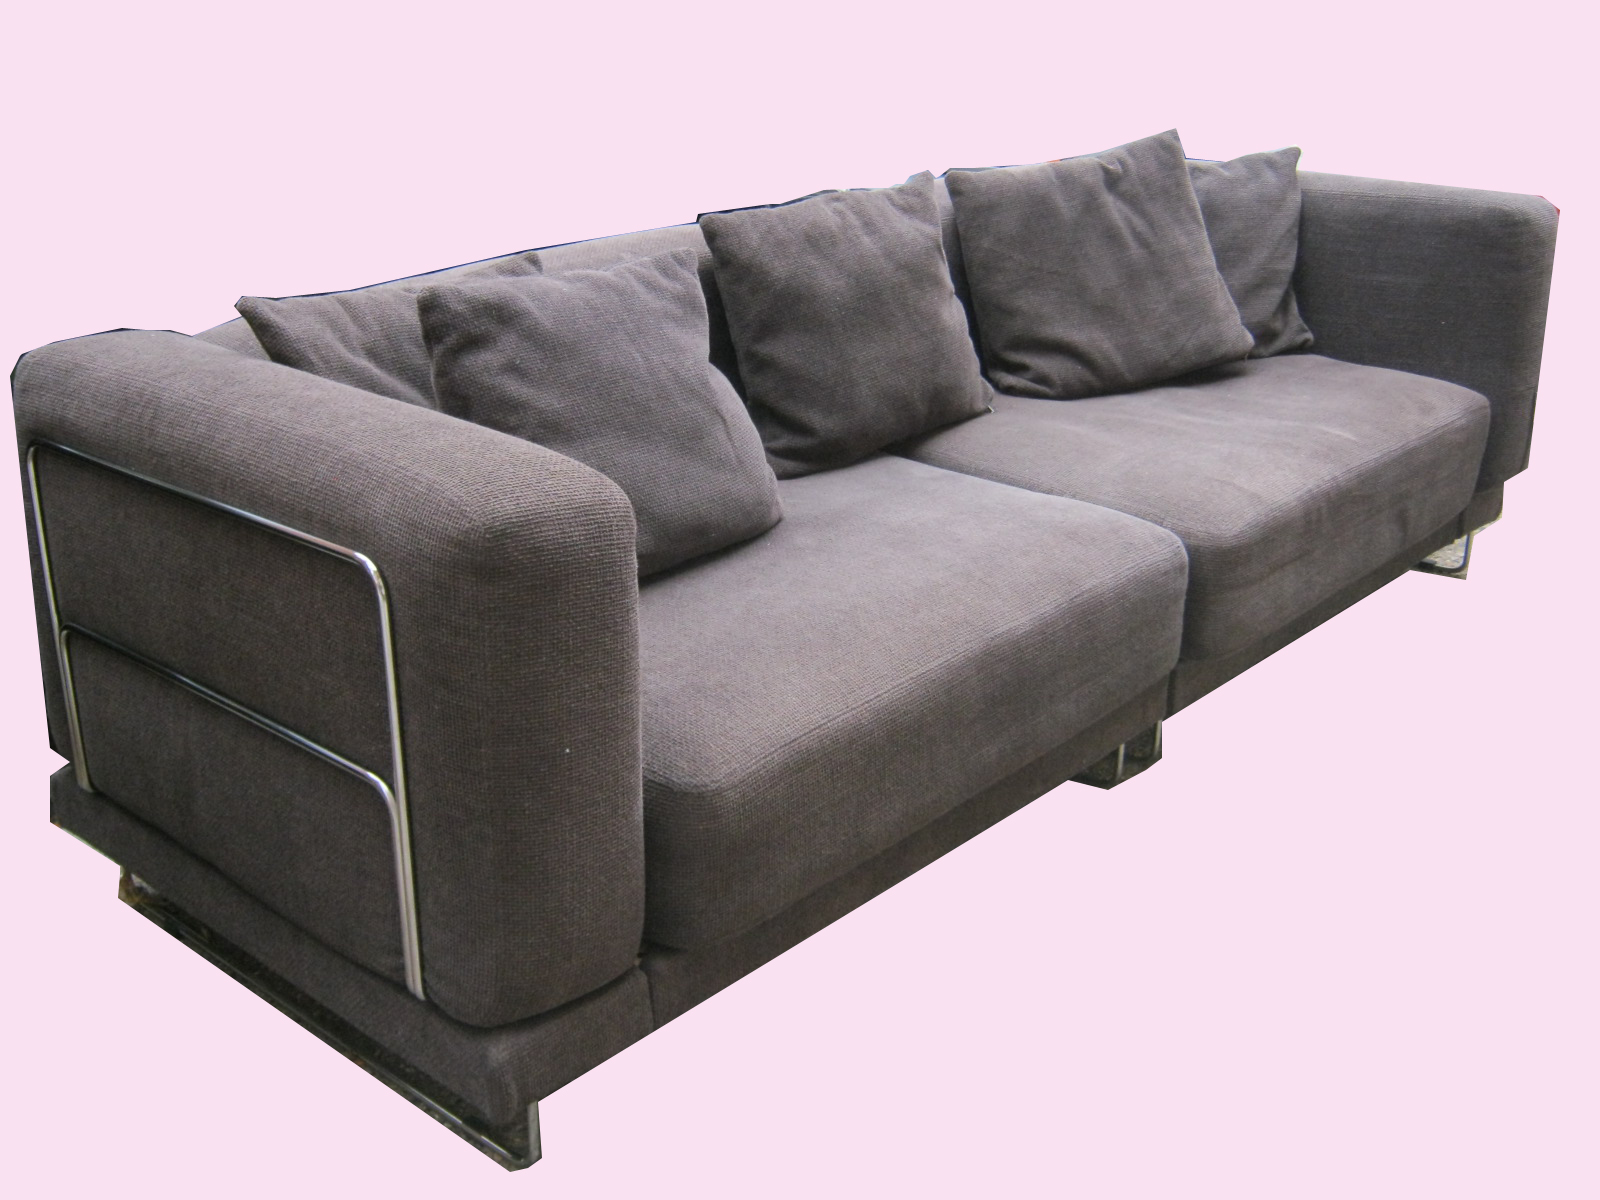 Uhuru Furniture Collectibles IKEA Tylosand Living Room Set SOLD